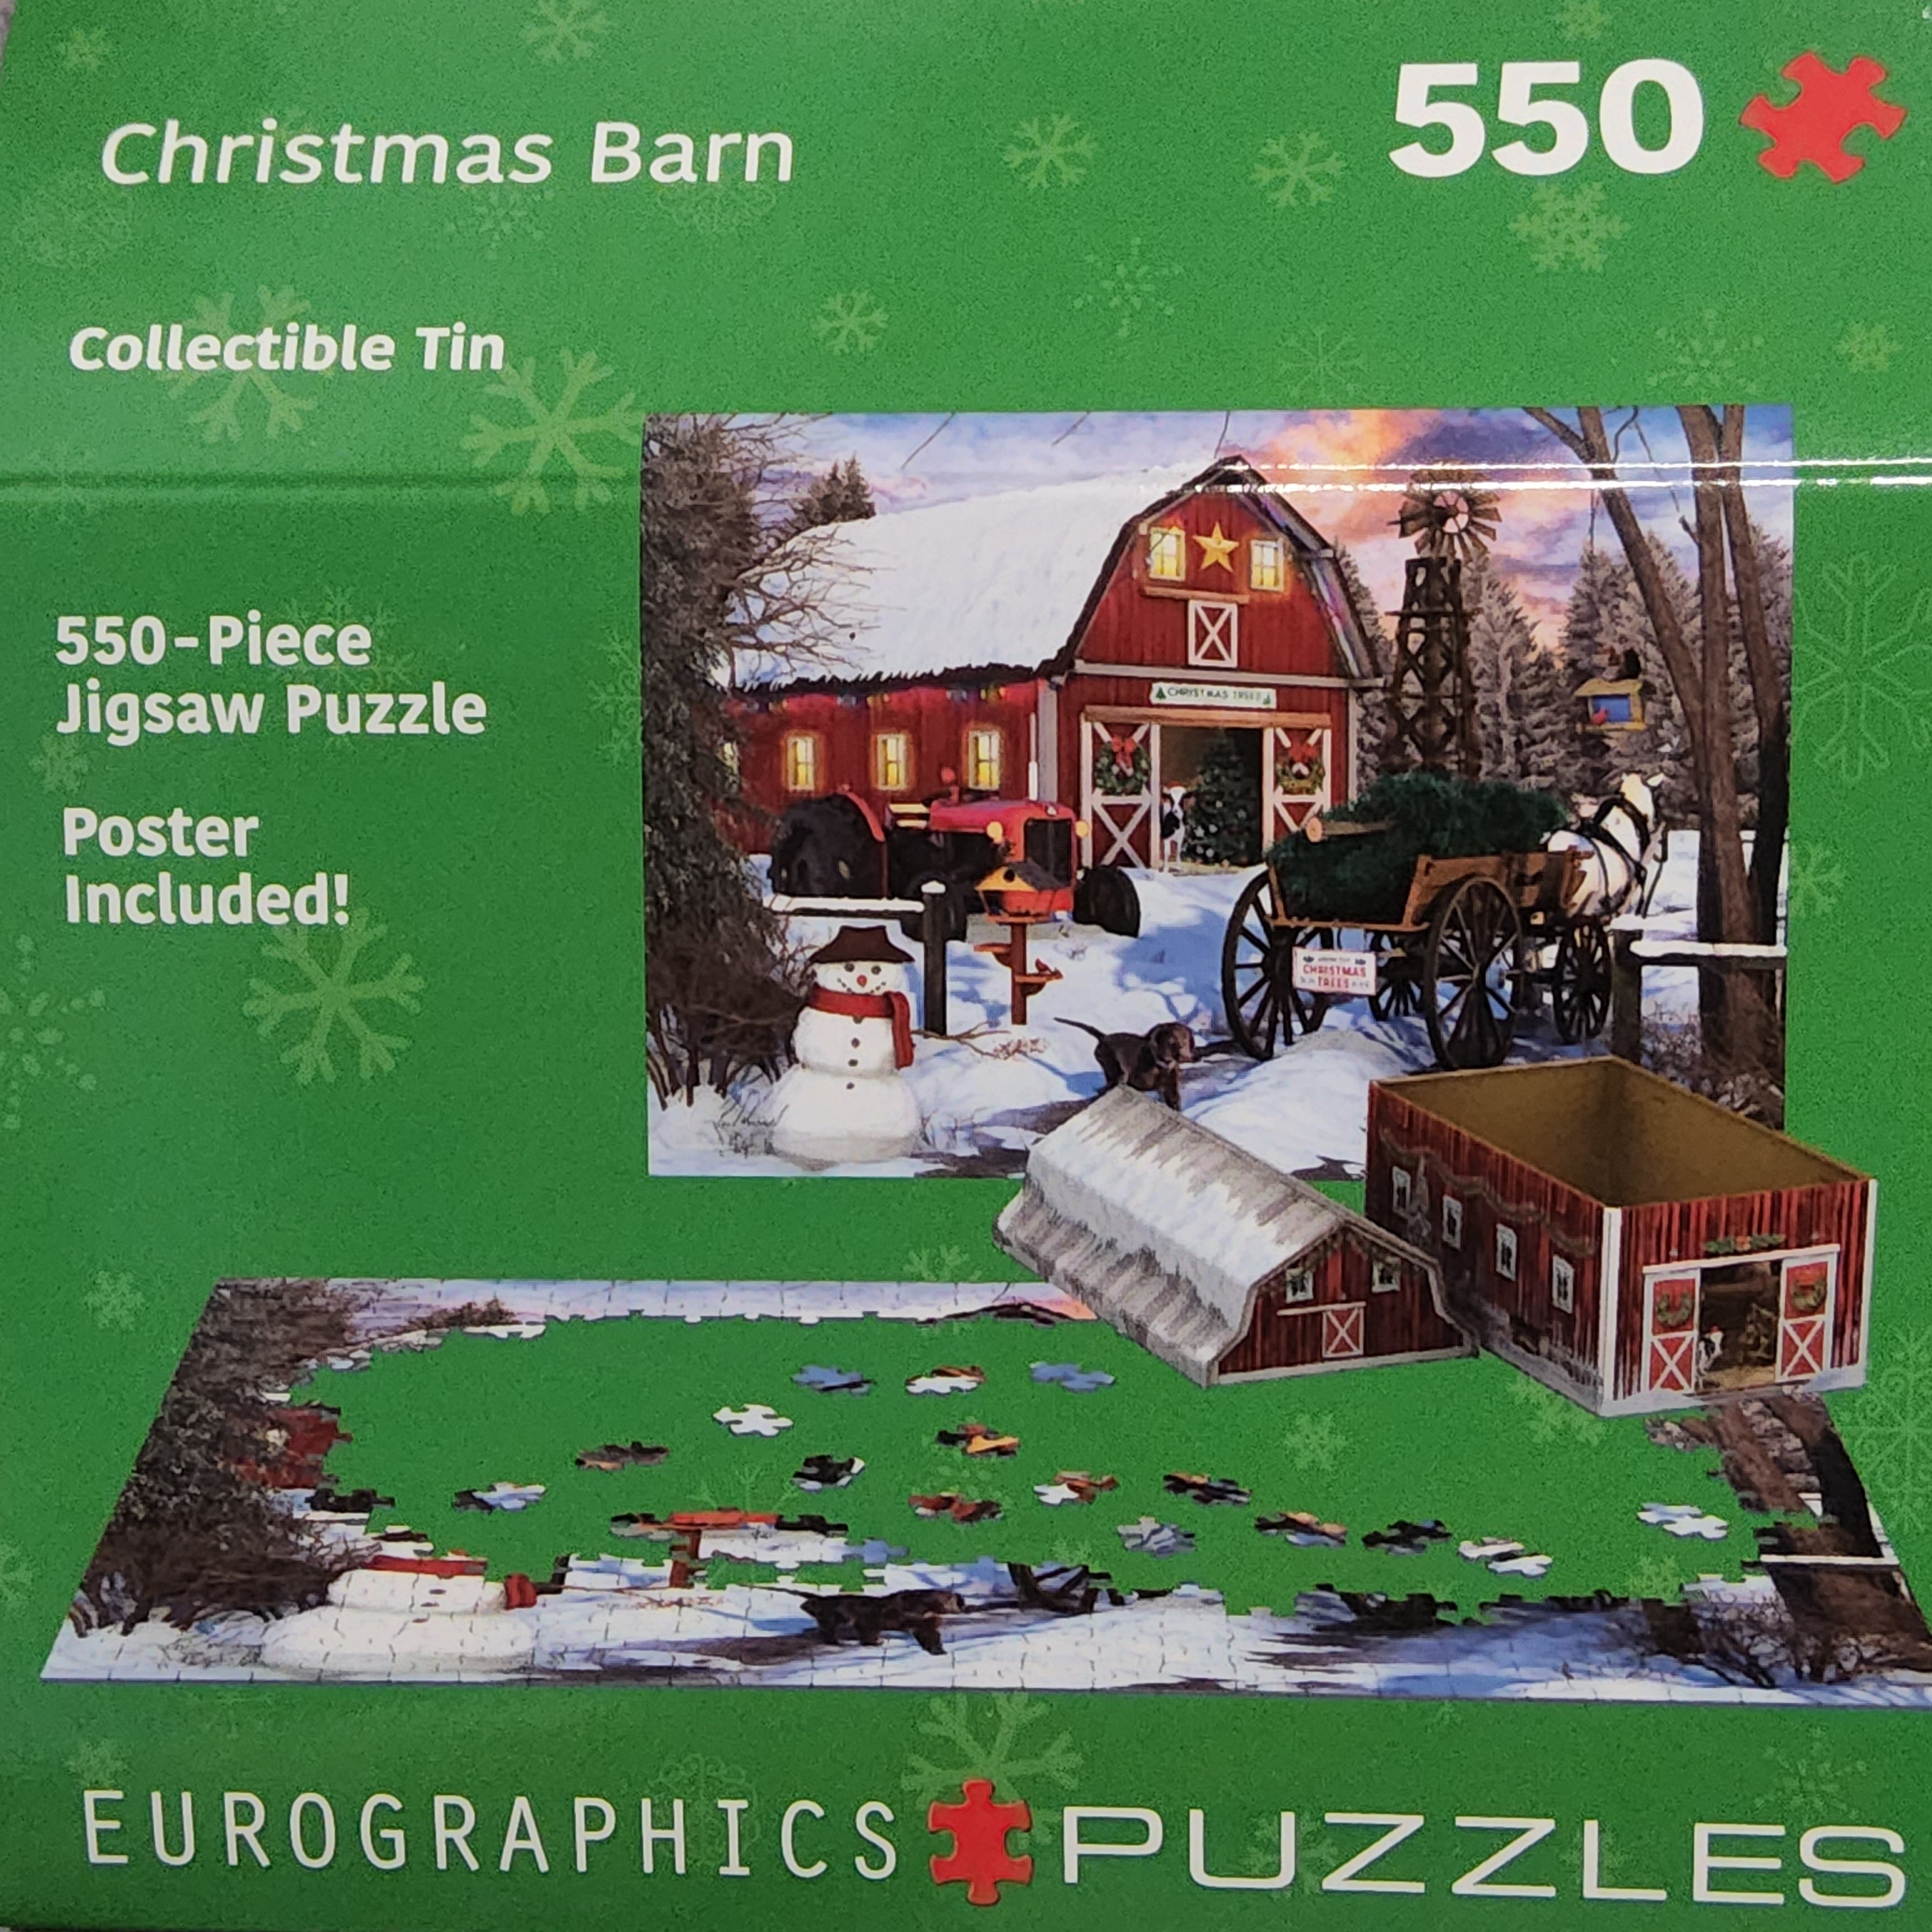 Eurographics Puzzle - Collectible Tin - Christmas Barn - 550 pieces - 8551-5665